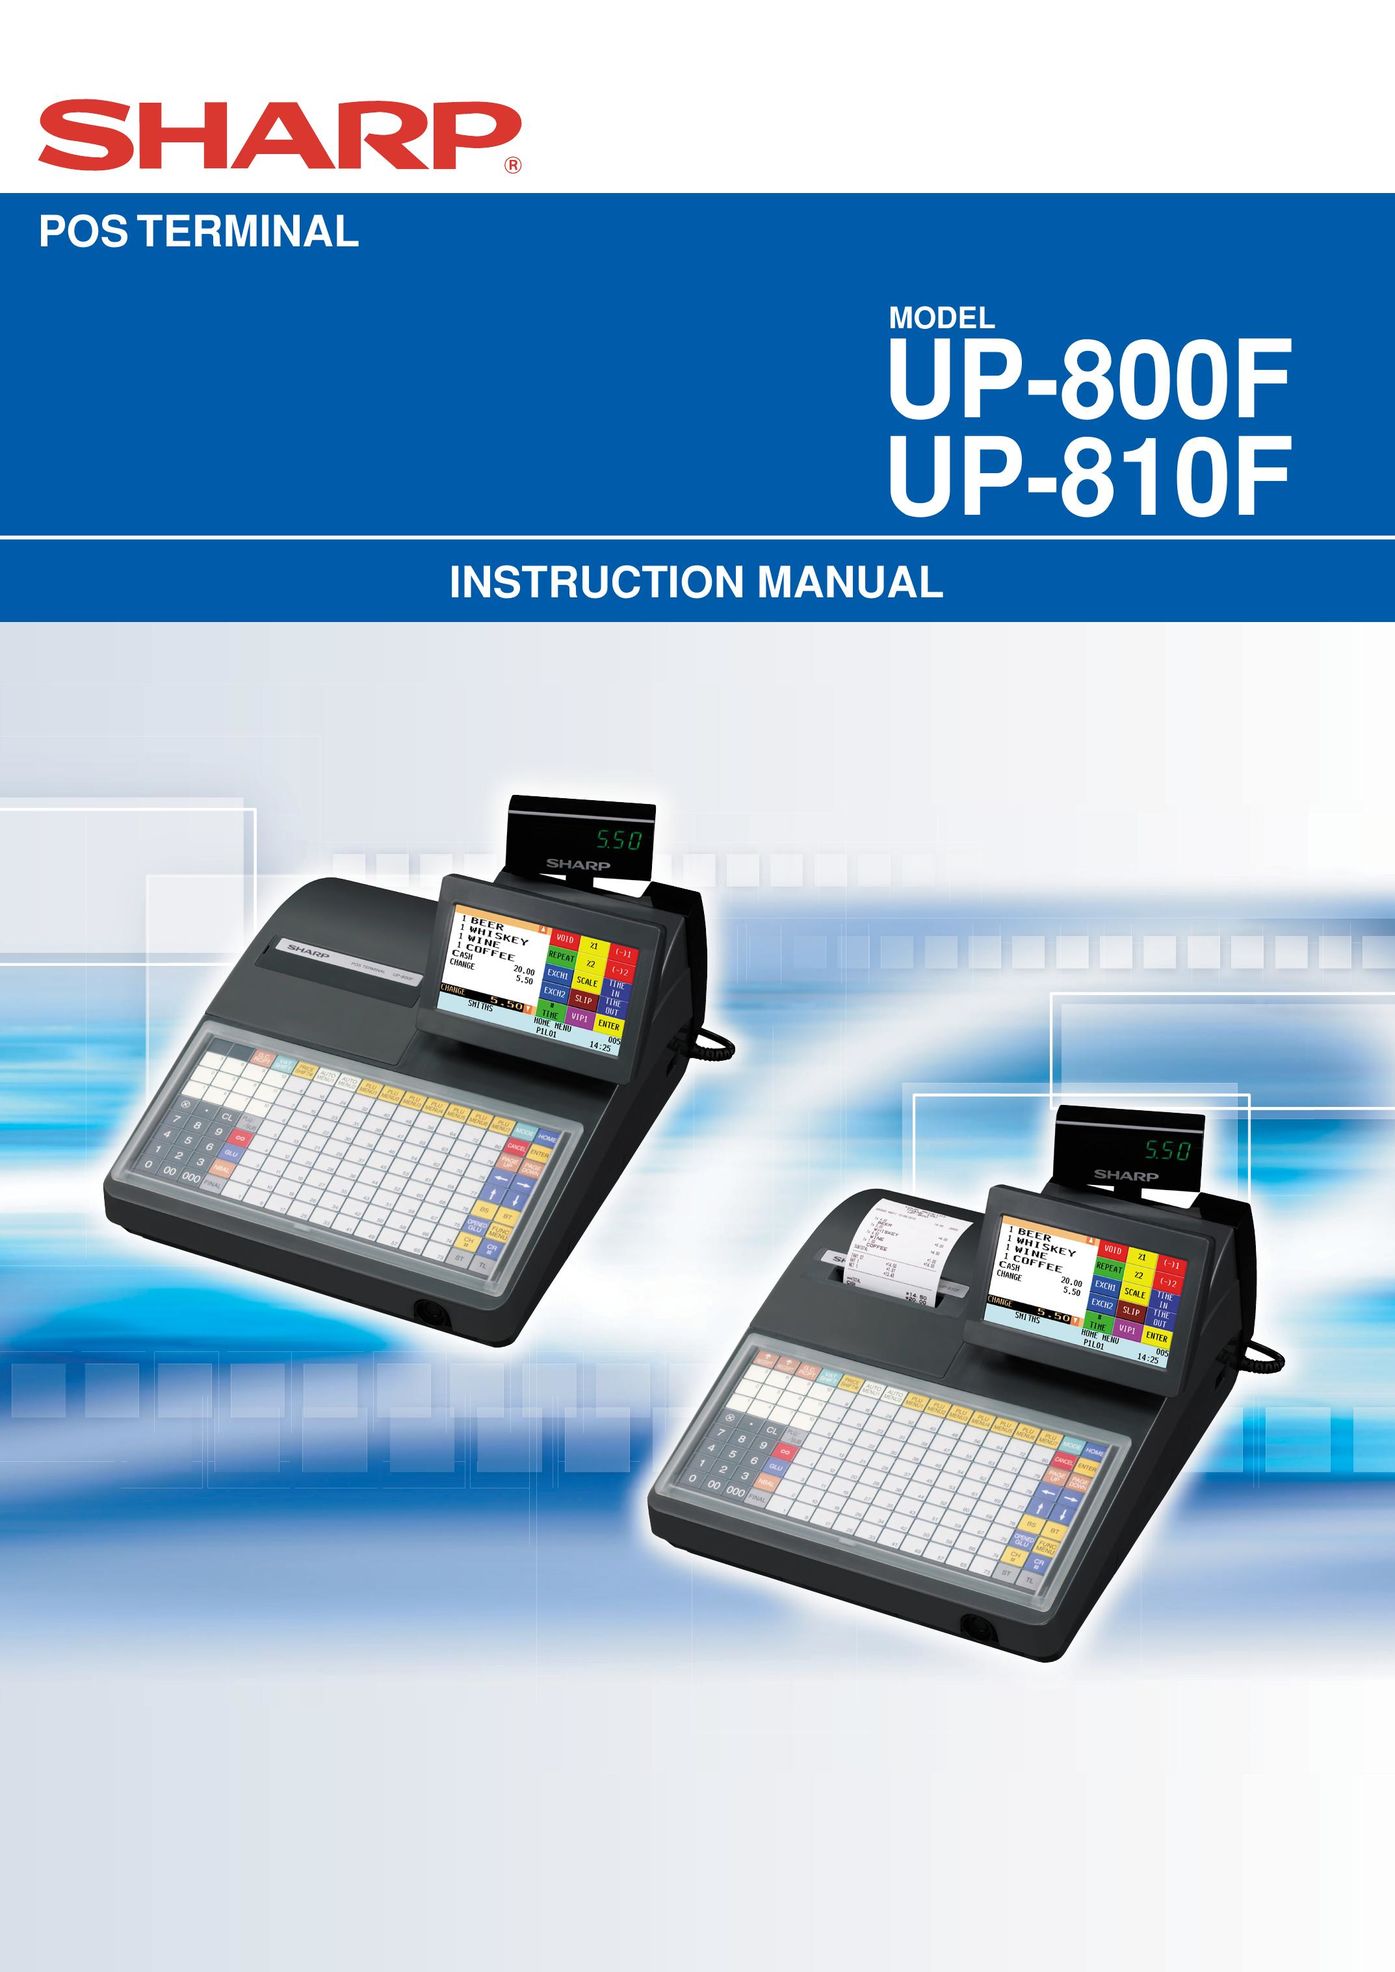 Sharp UP-800F Cash Register User Manual